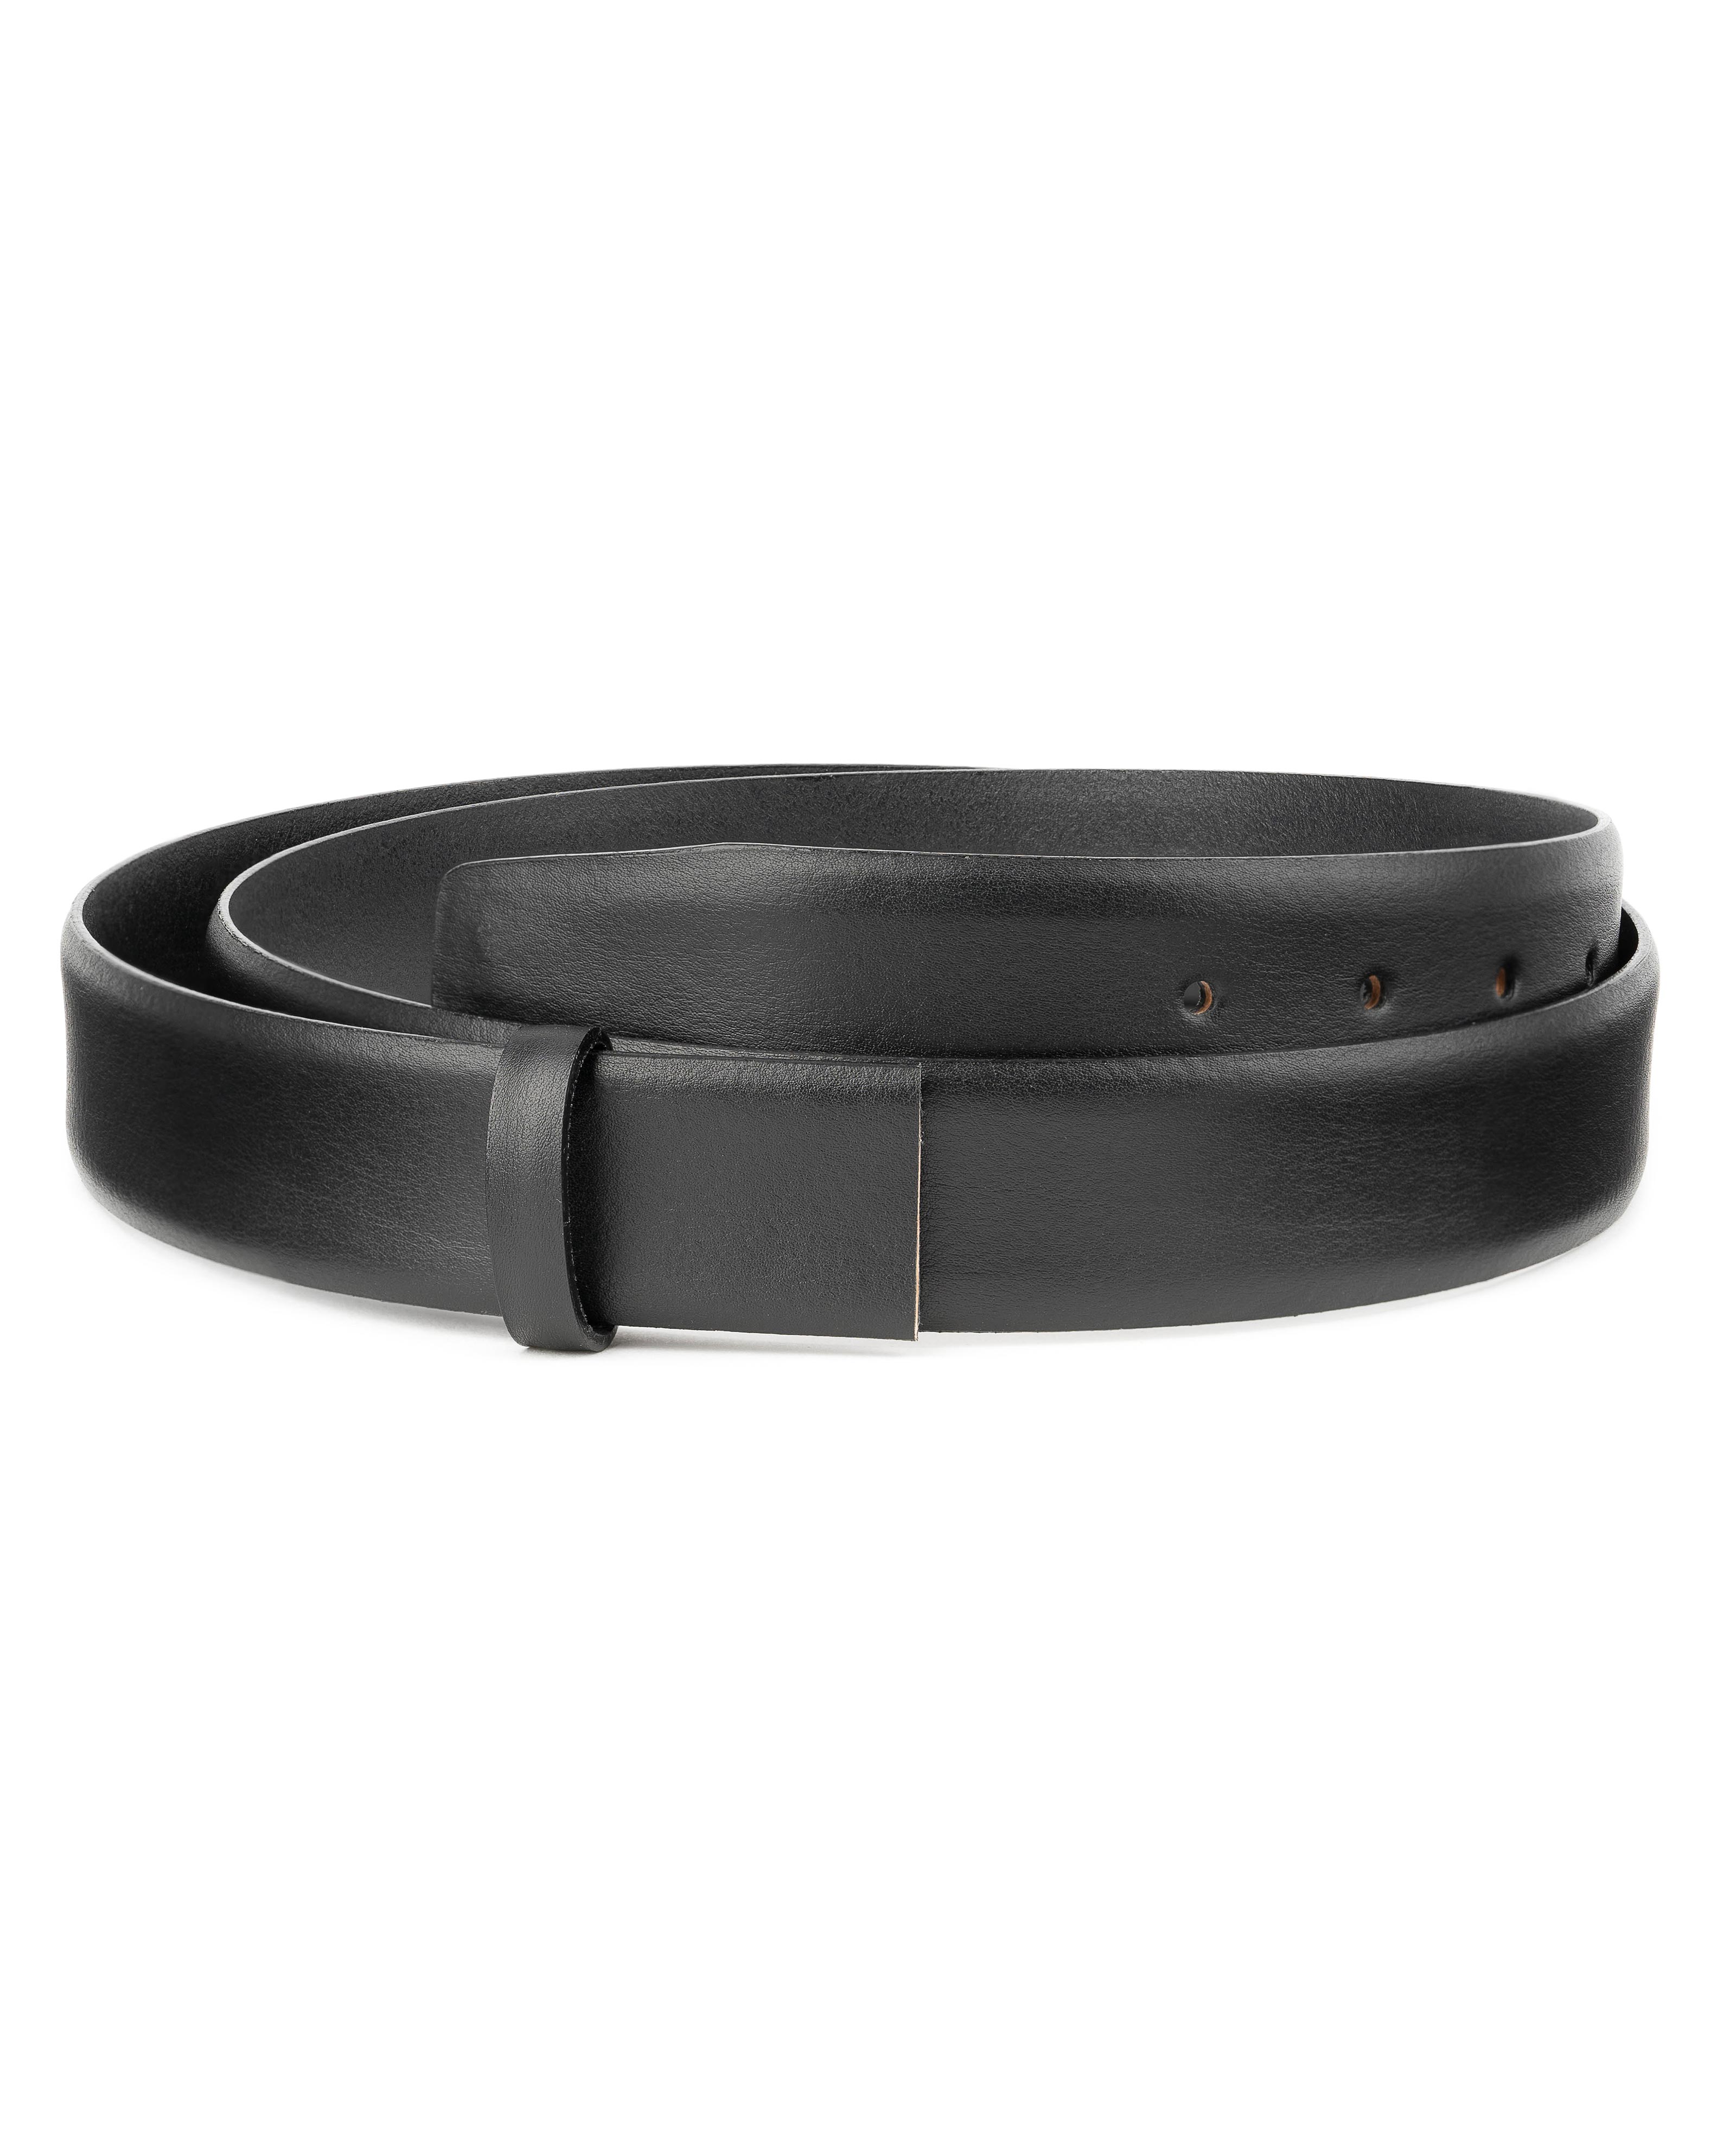 Buy Men\'s Black Smooth Leather Belt Strap - Adjustable - Free Shipping